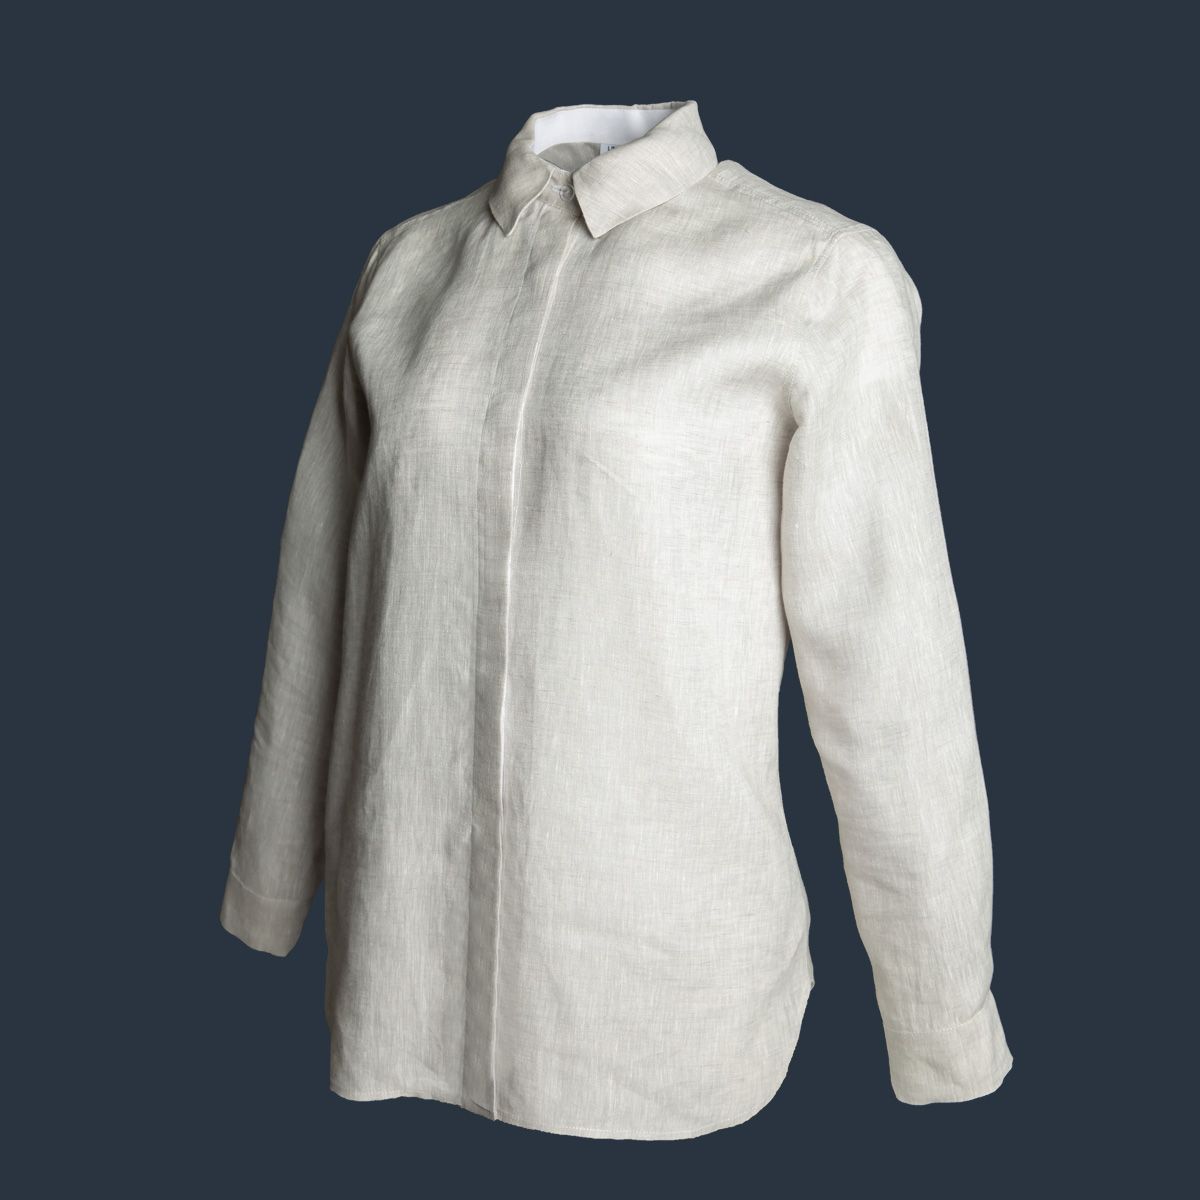 Women's 100% Linen Shirt - Imogen - Grey/Navy/White - Made in Ireland